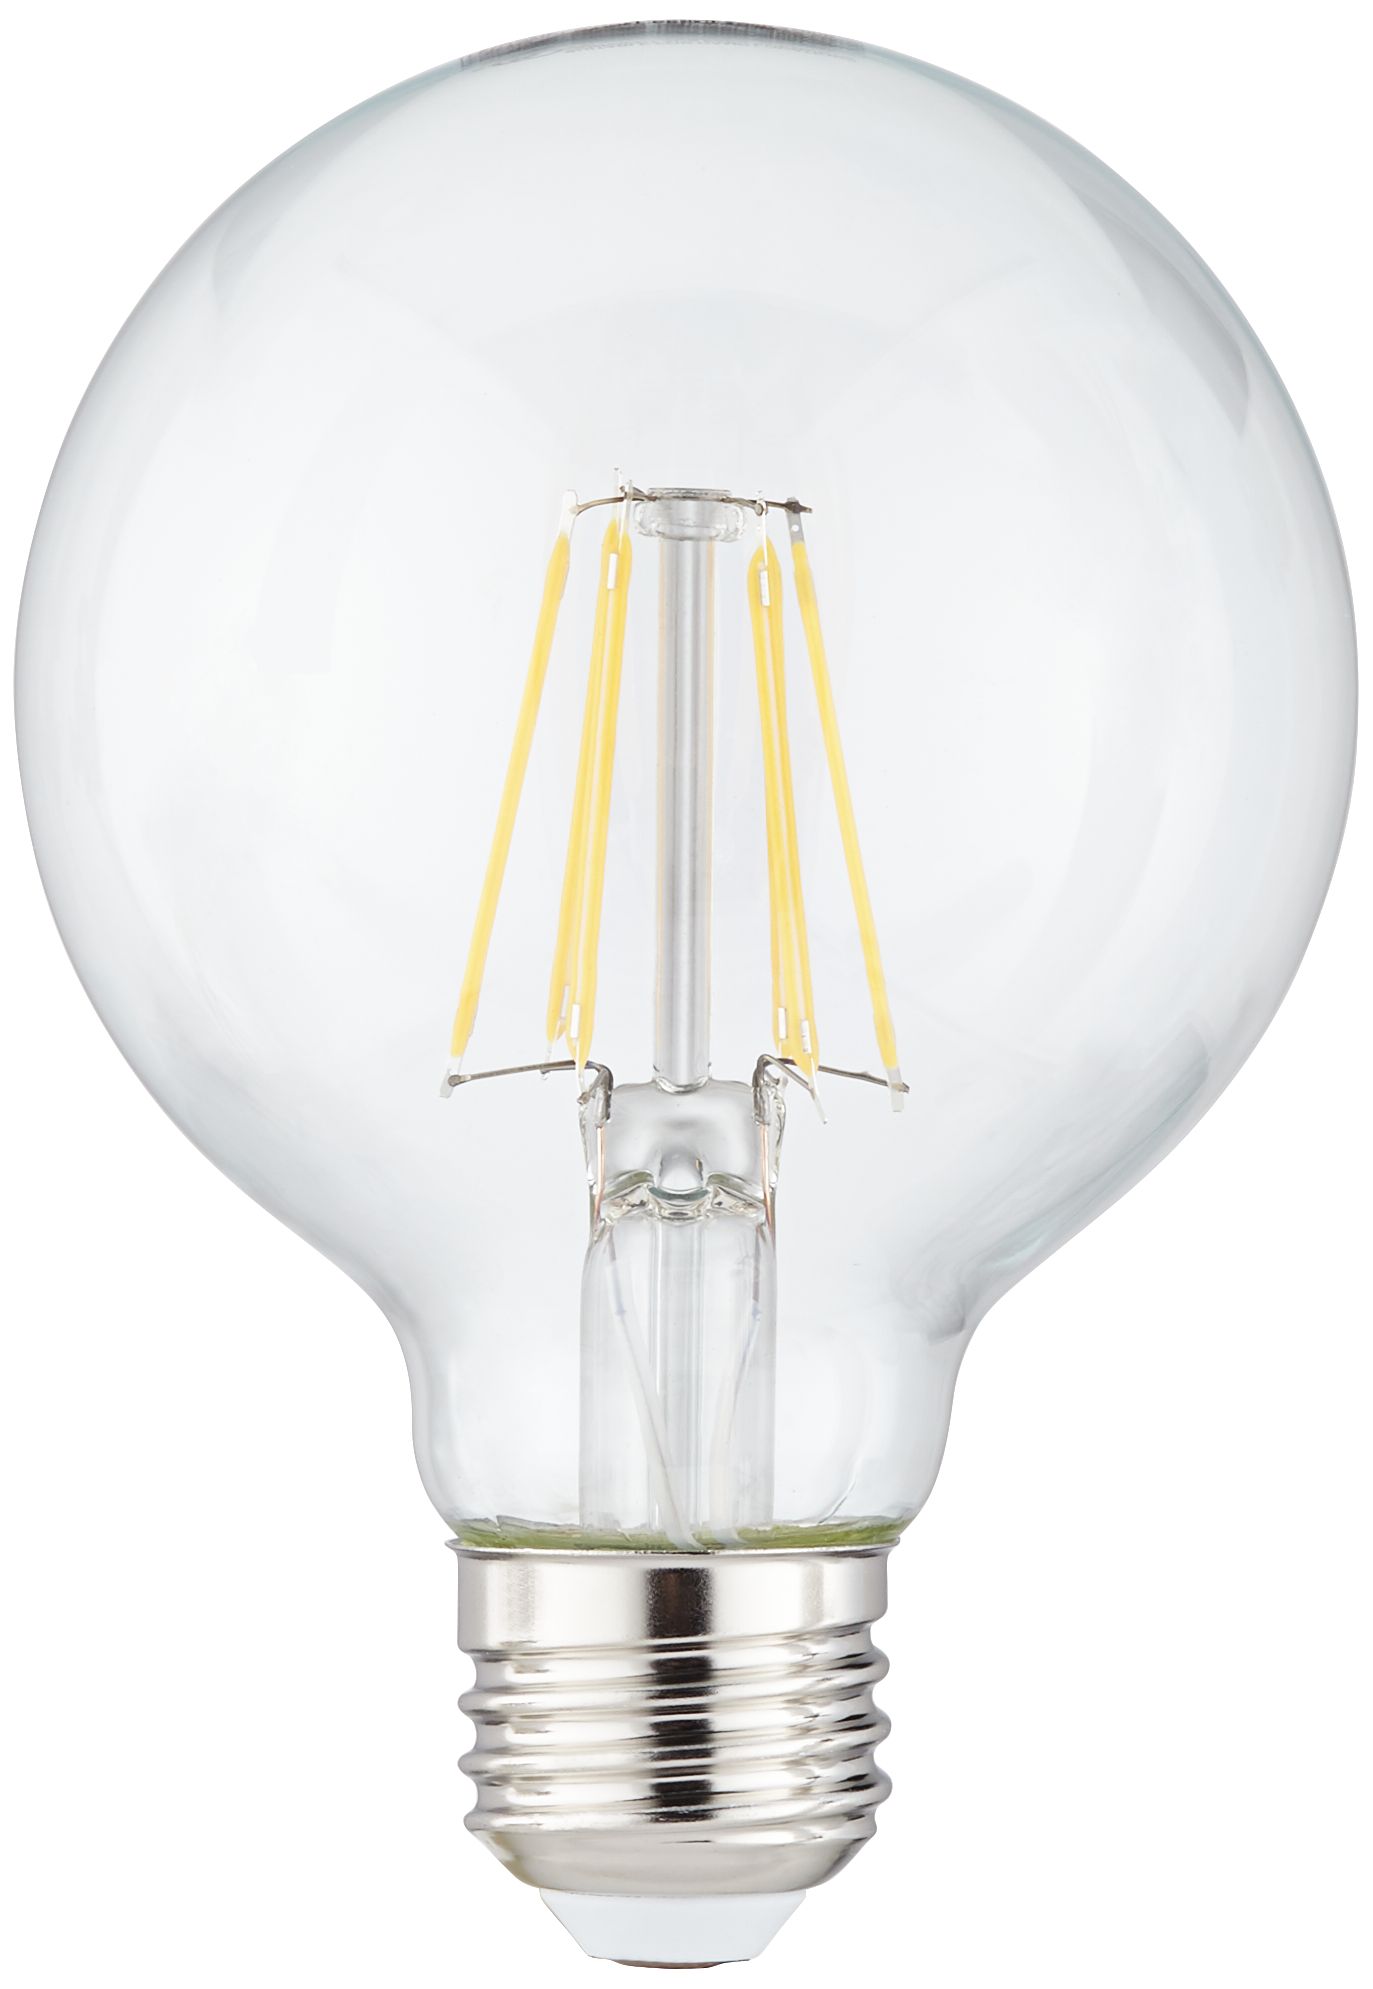 8x 300W Clear Filament GLS Bright Light Bulb Lamp GES E40 Goliath Edison Screw 